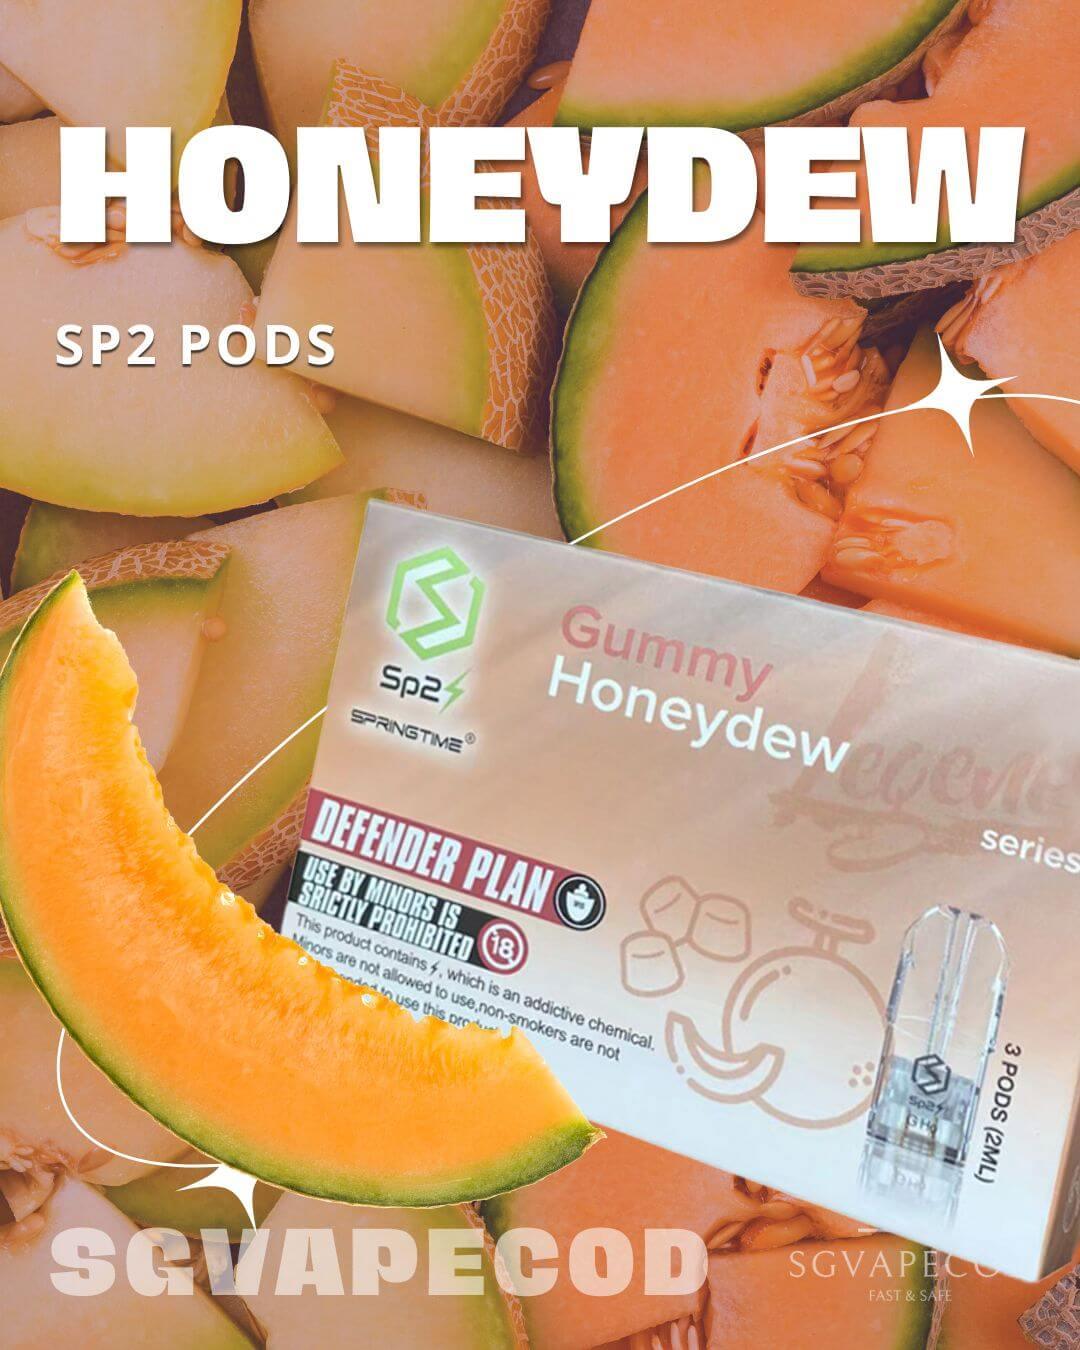 Sp2-Pod-Honeydew-(SG VAPE COD)